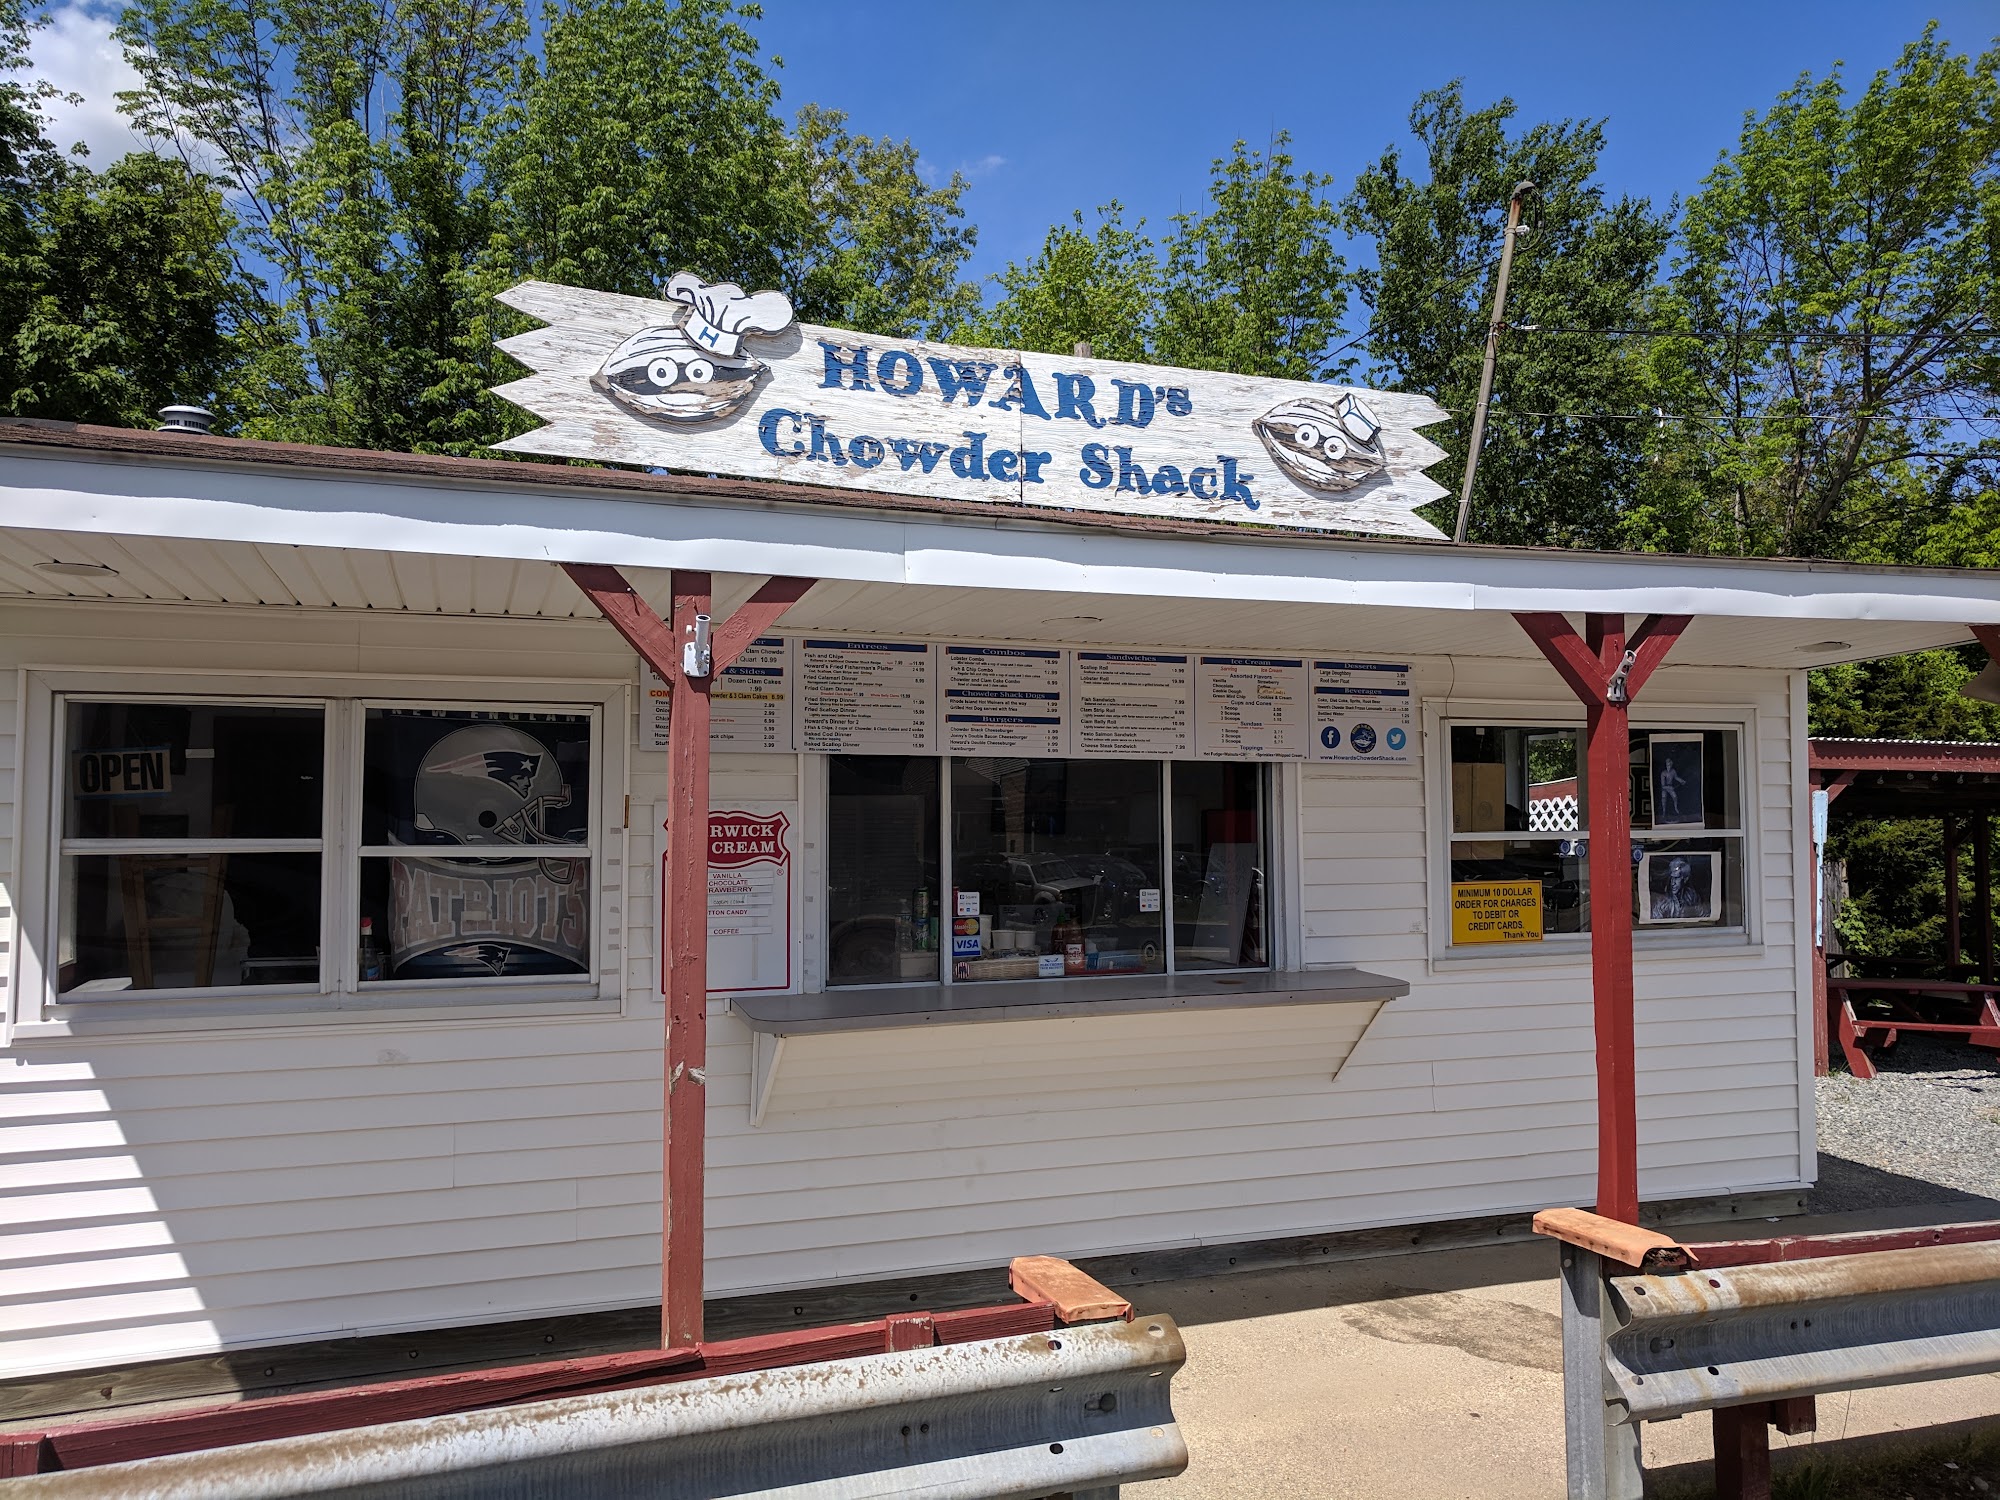 Howard's Chowder Shack